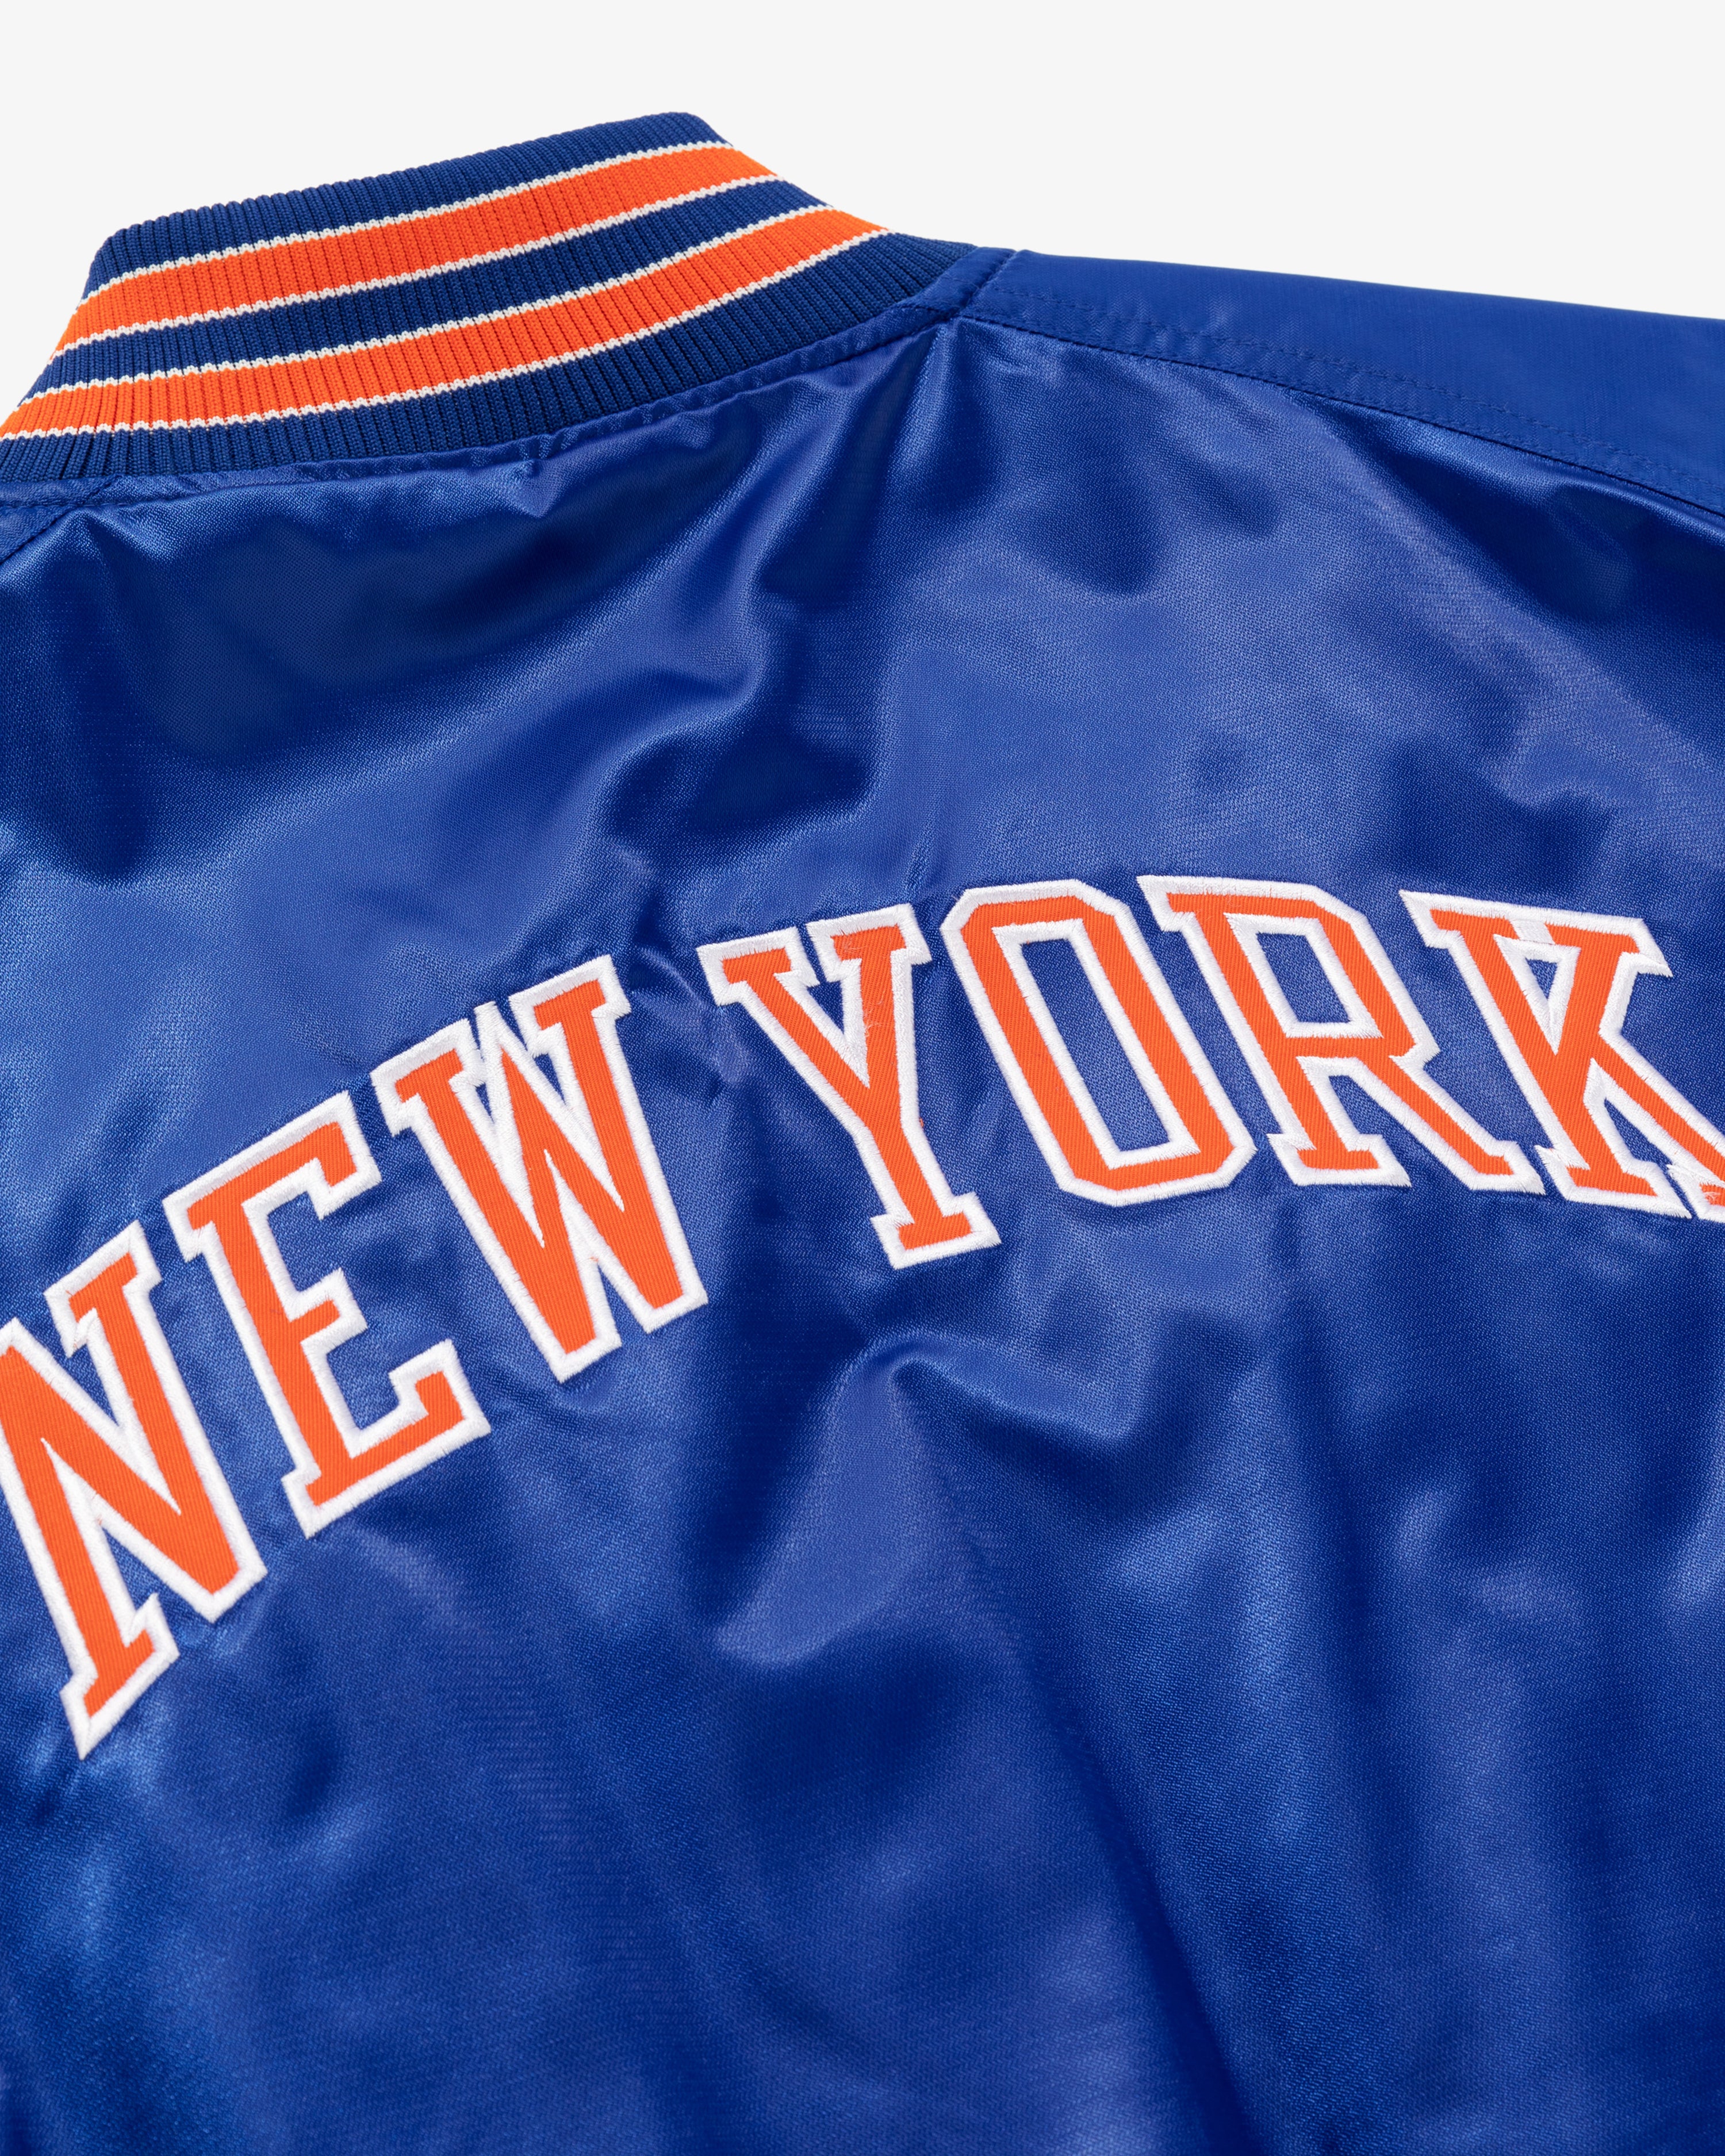 Vintage New York Knicks Franchise Satin Jacket